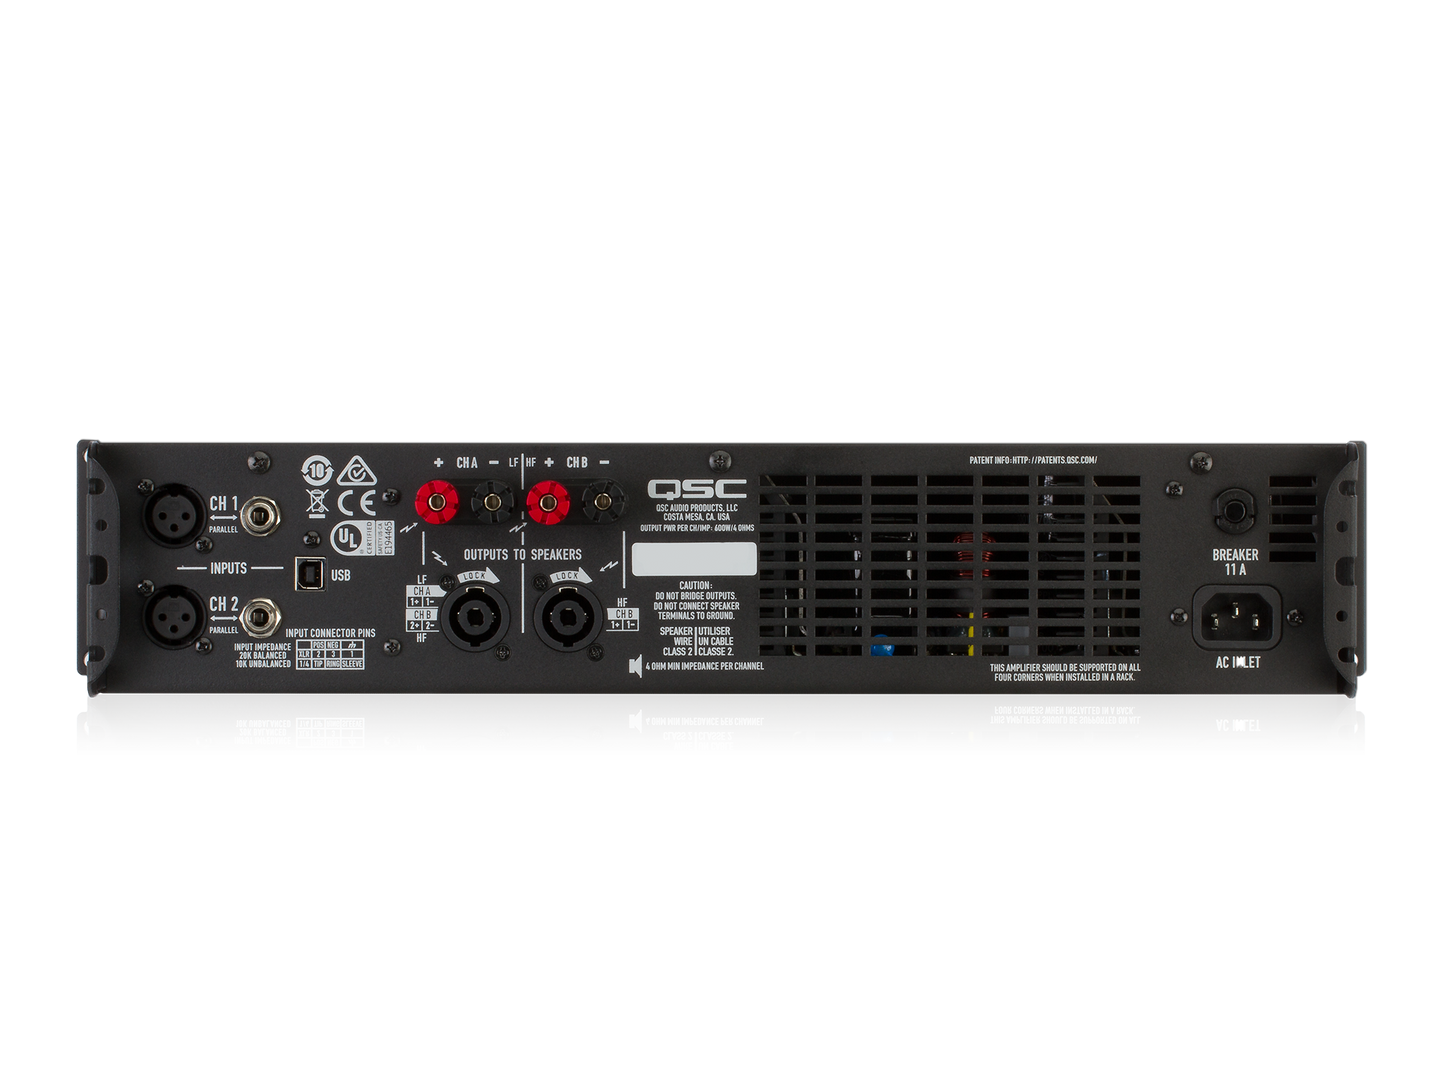 QSC GXD4 Dual Channel 400W/8Ohms Power Amplifier